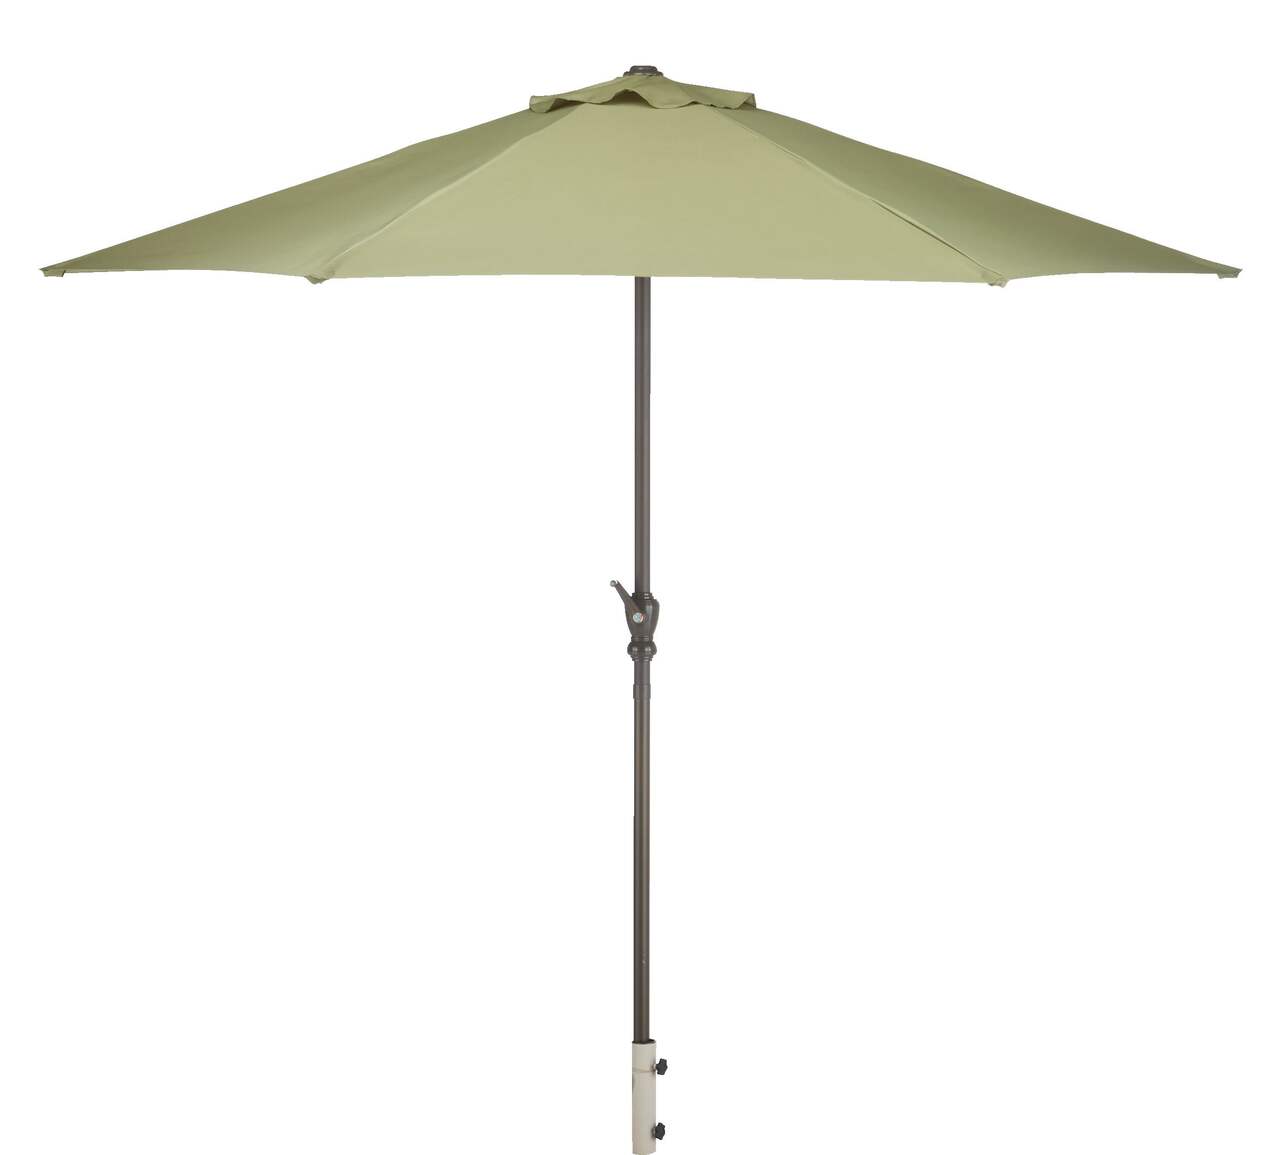 CANVAS UV-Protected Fabric Outdoor/Patio Market Umbrella w/ Crank Handle,  9-ft